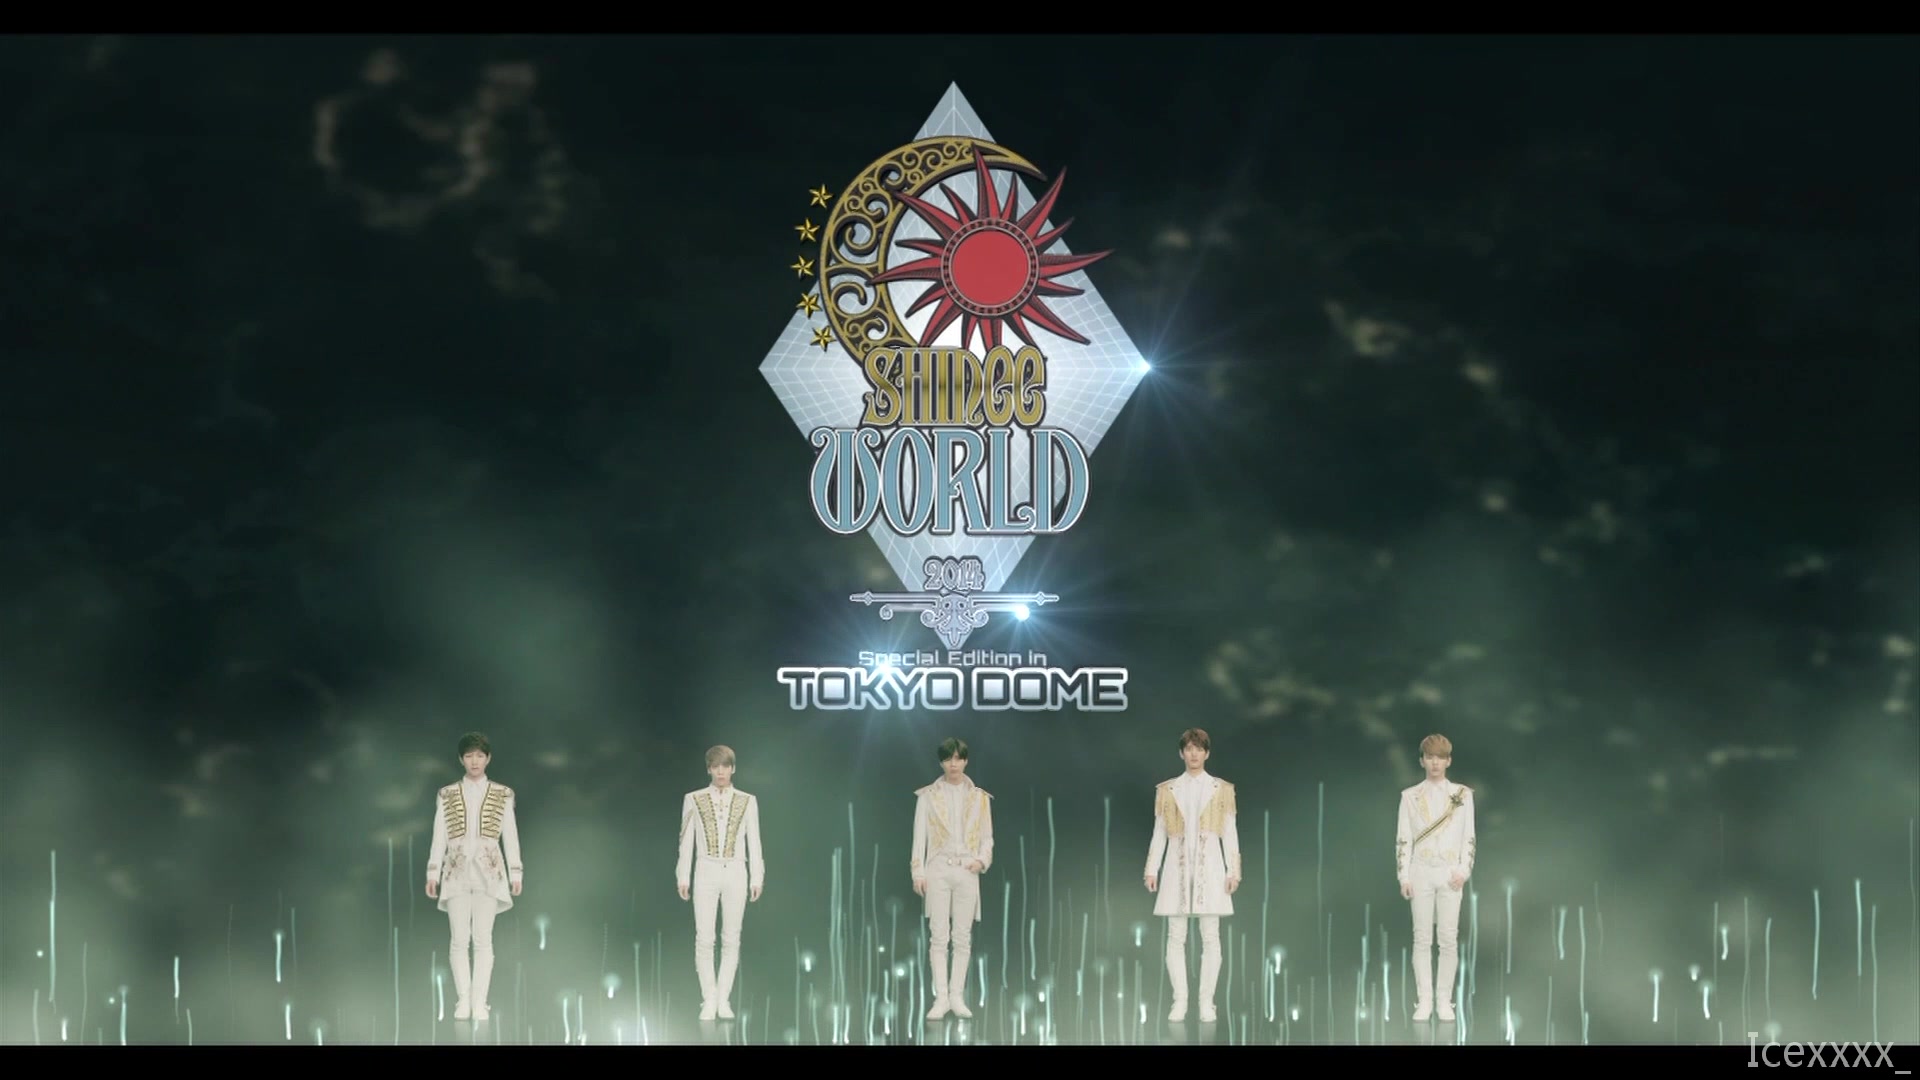 SHINee演唱会】~I'm your boy~SHINee WORLD 2014 special edition in Tokyo Dome _哔哩哔哩(゜-゜)つロ干杯~-bilibili